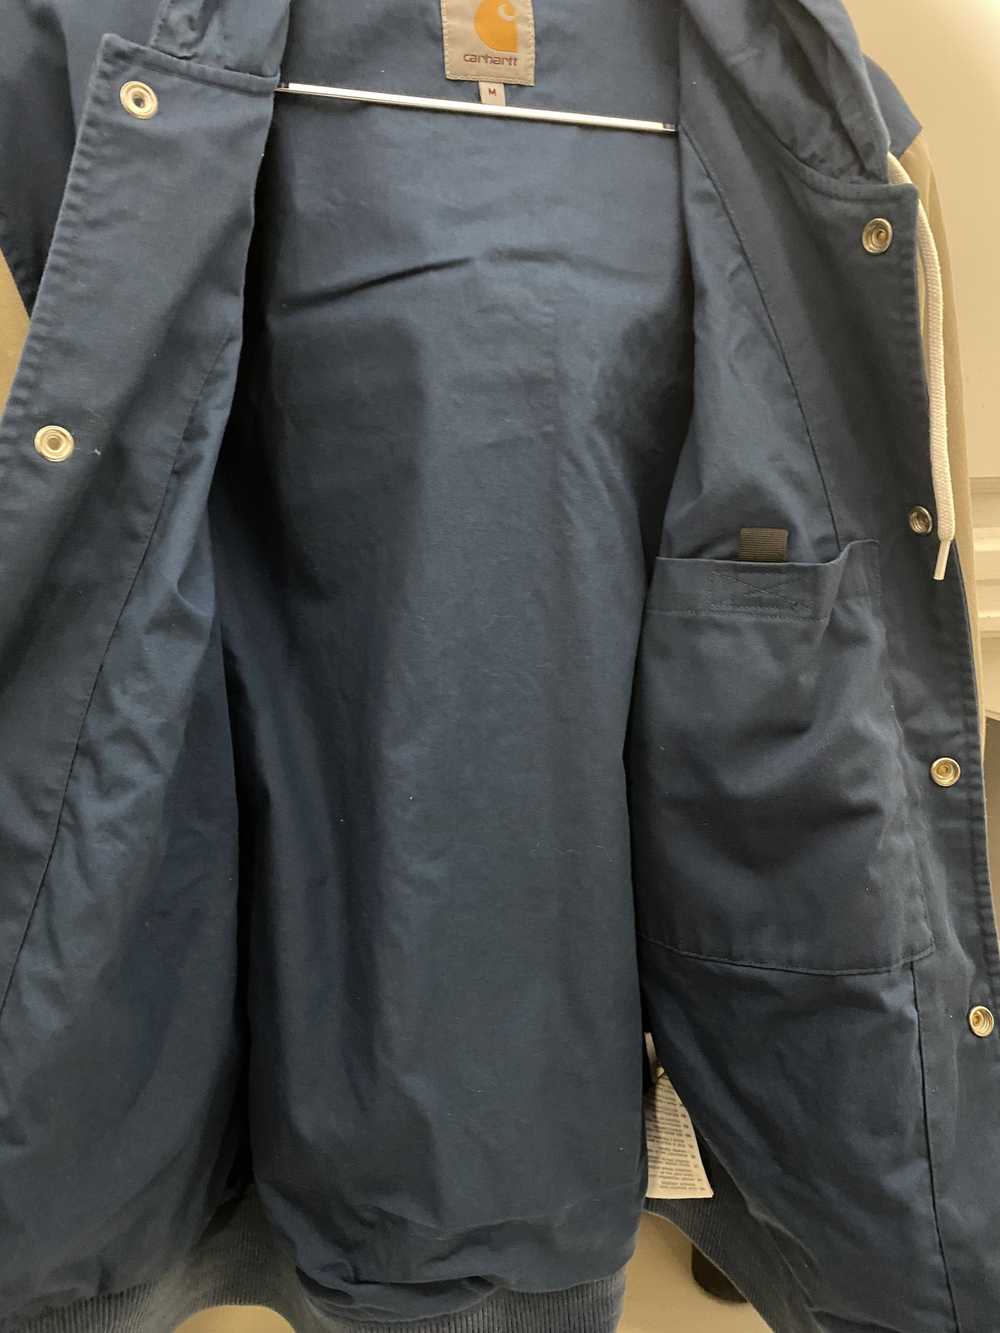 Carhartt Carhartt jacket size M - image 6